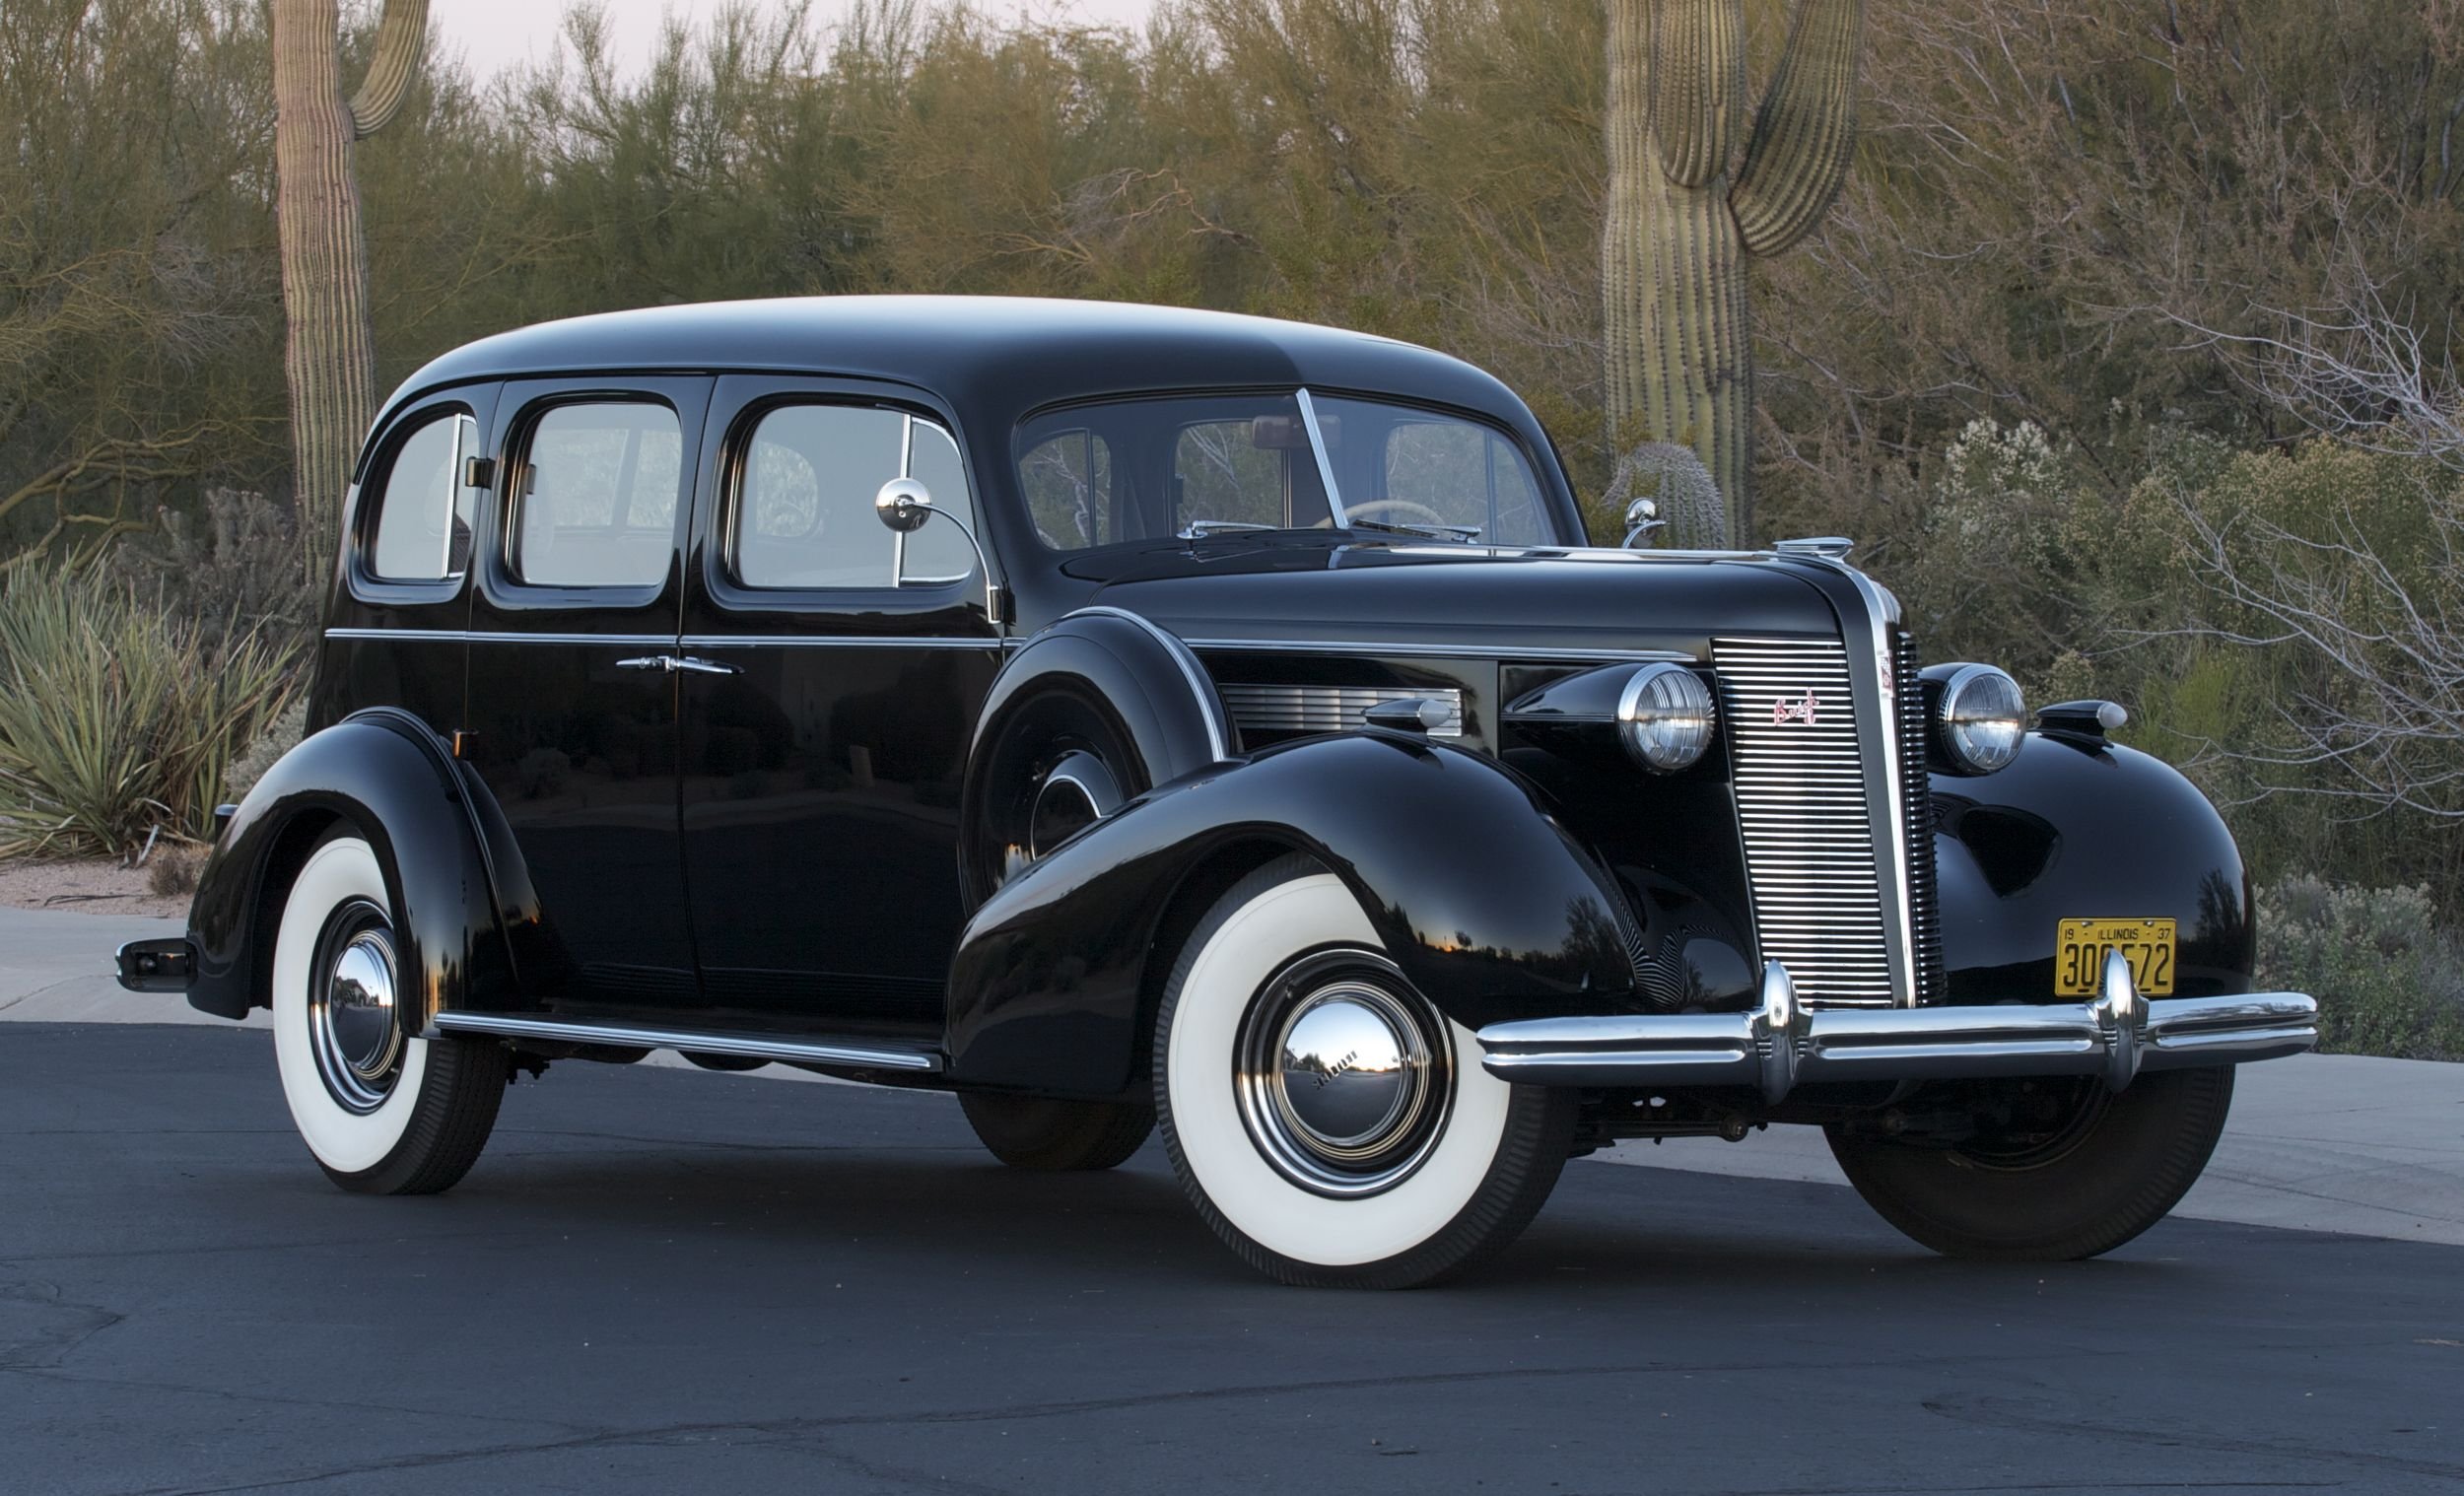 1937, Buick, Sedan 4, Door, Limited, Owned, Lee, Gurvey, Classic, Old, Retro, Vintage, Blackusa, 2500x1518 Wallpaper